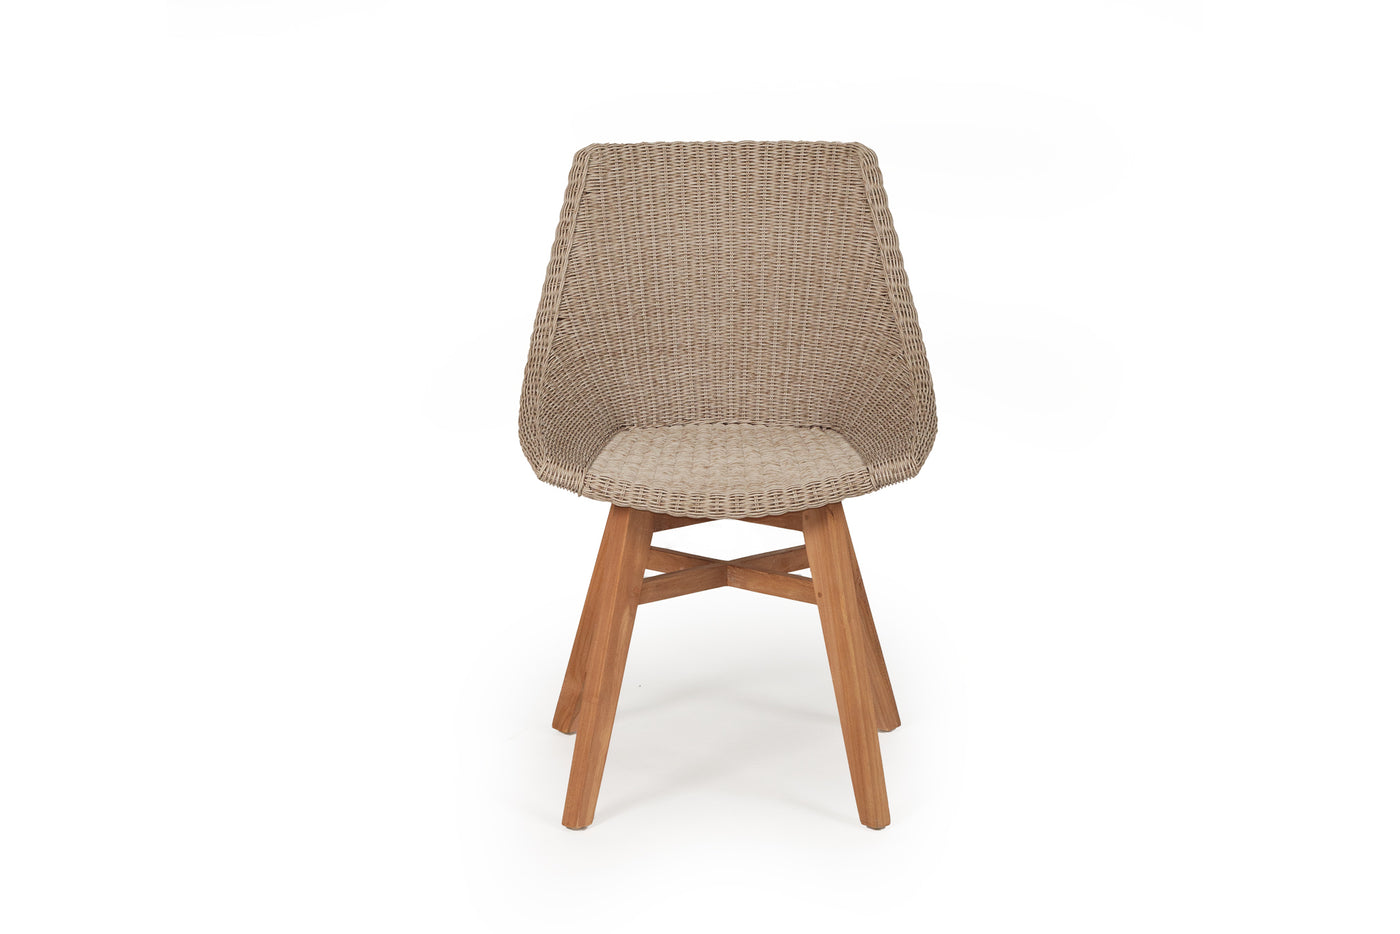 Oceanic Outdoor Dining Chair - Mushroom - Set of 2